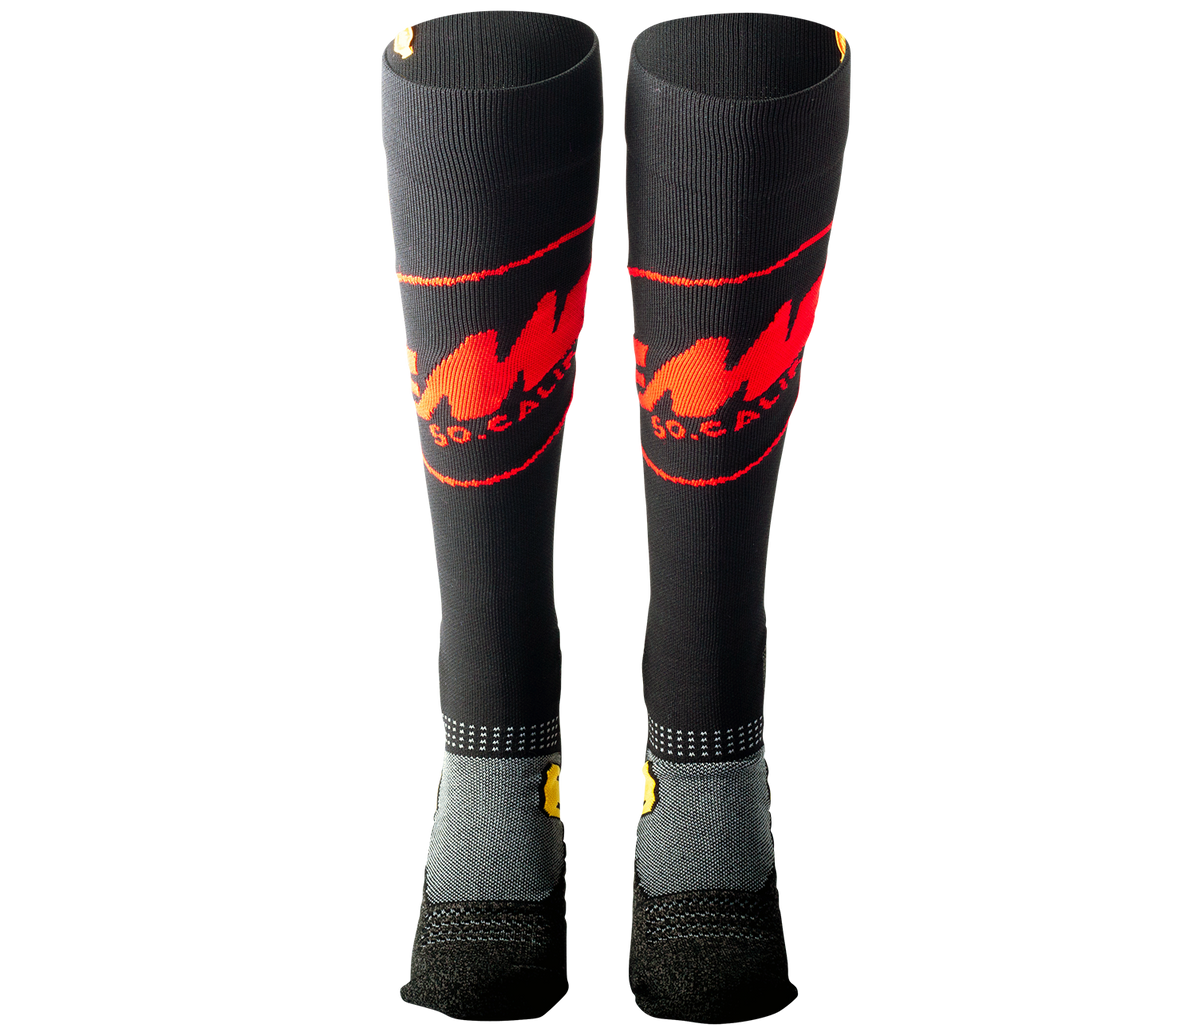 REV Knee Brace Performance Moto Socks Black/Red – 100%